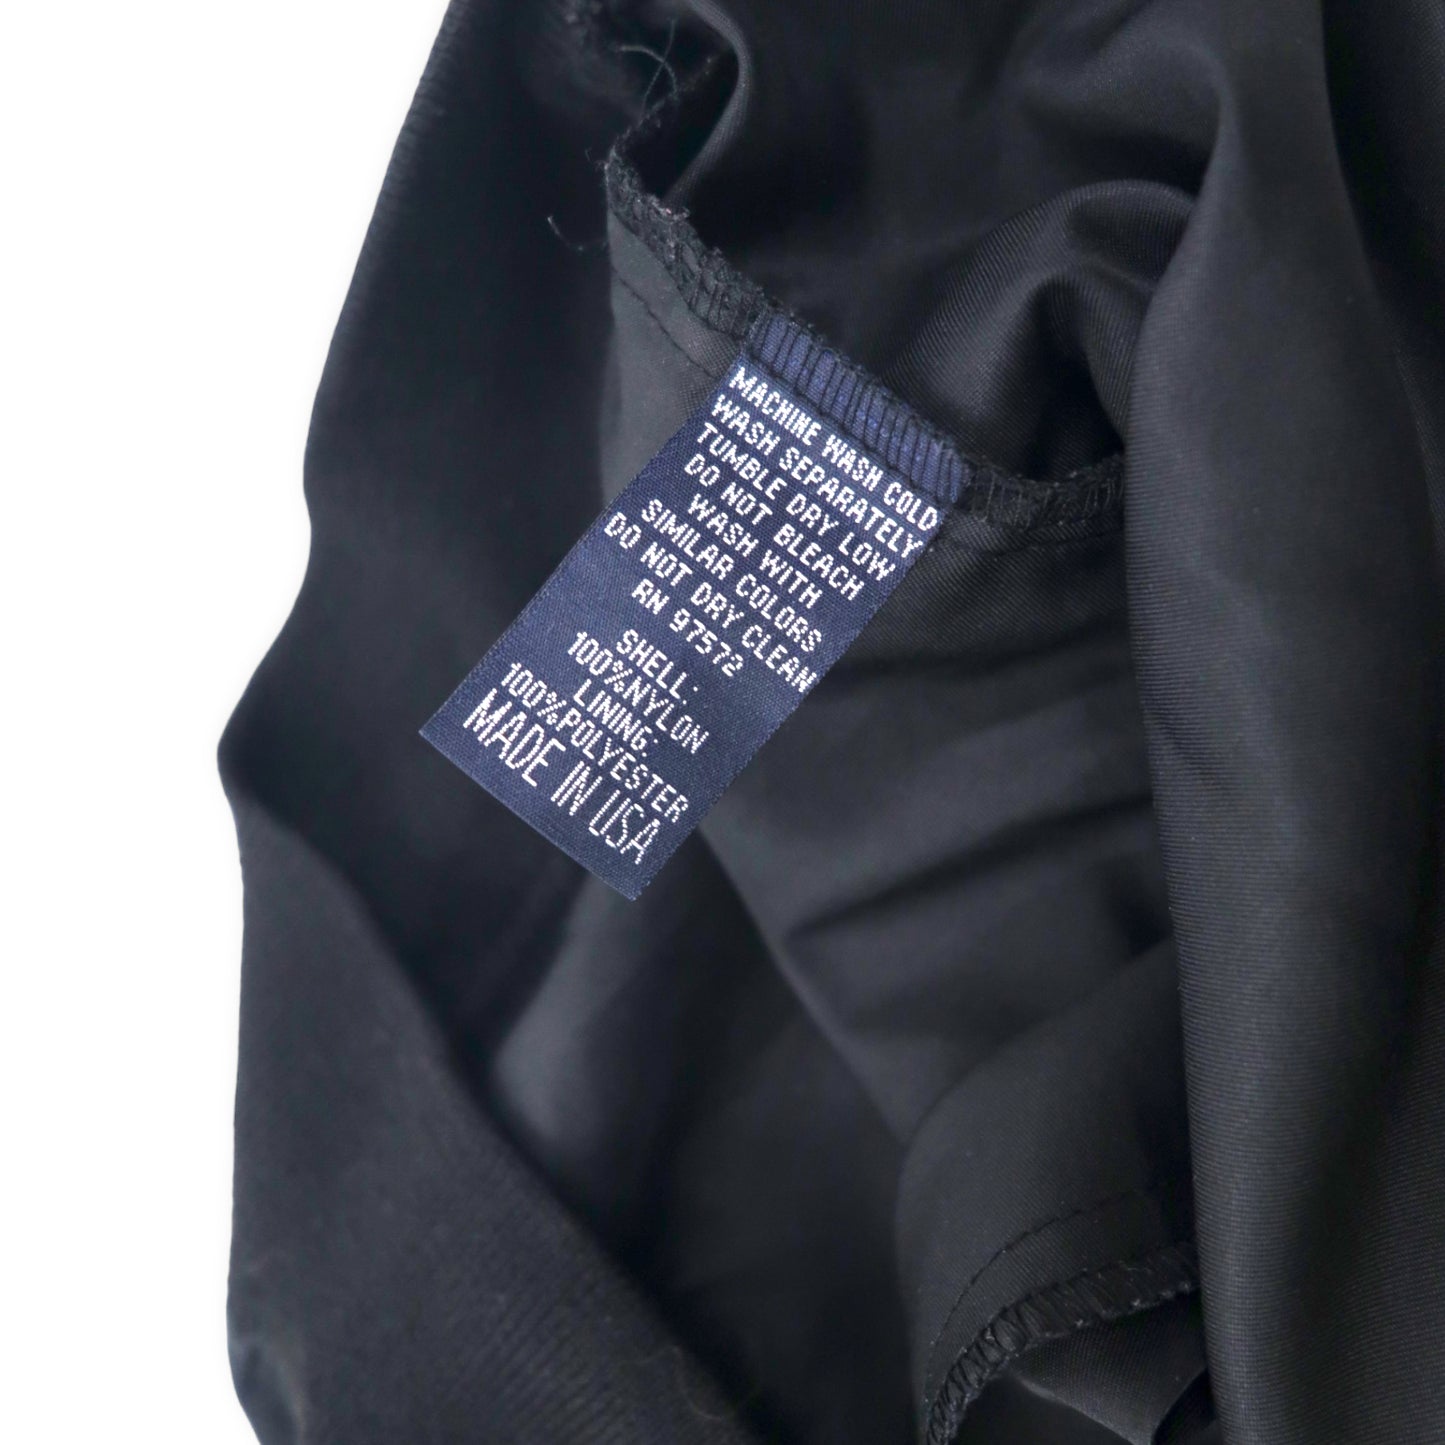 BAYSIDE USA製 ピステ プルオーバー ナイロンジャケット XL ブラック LENNOX US企業 刺繍 ビッグサイズ